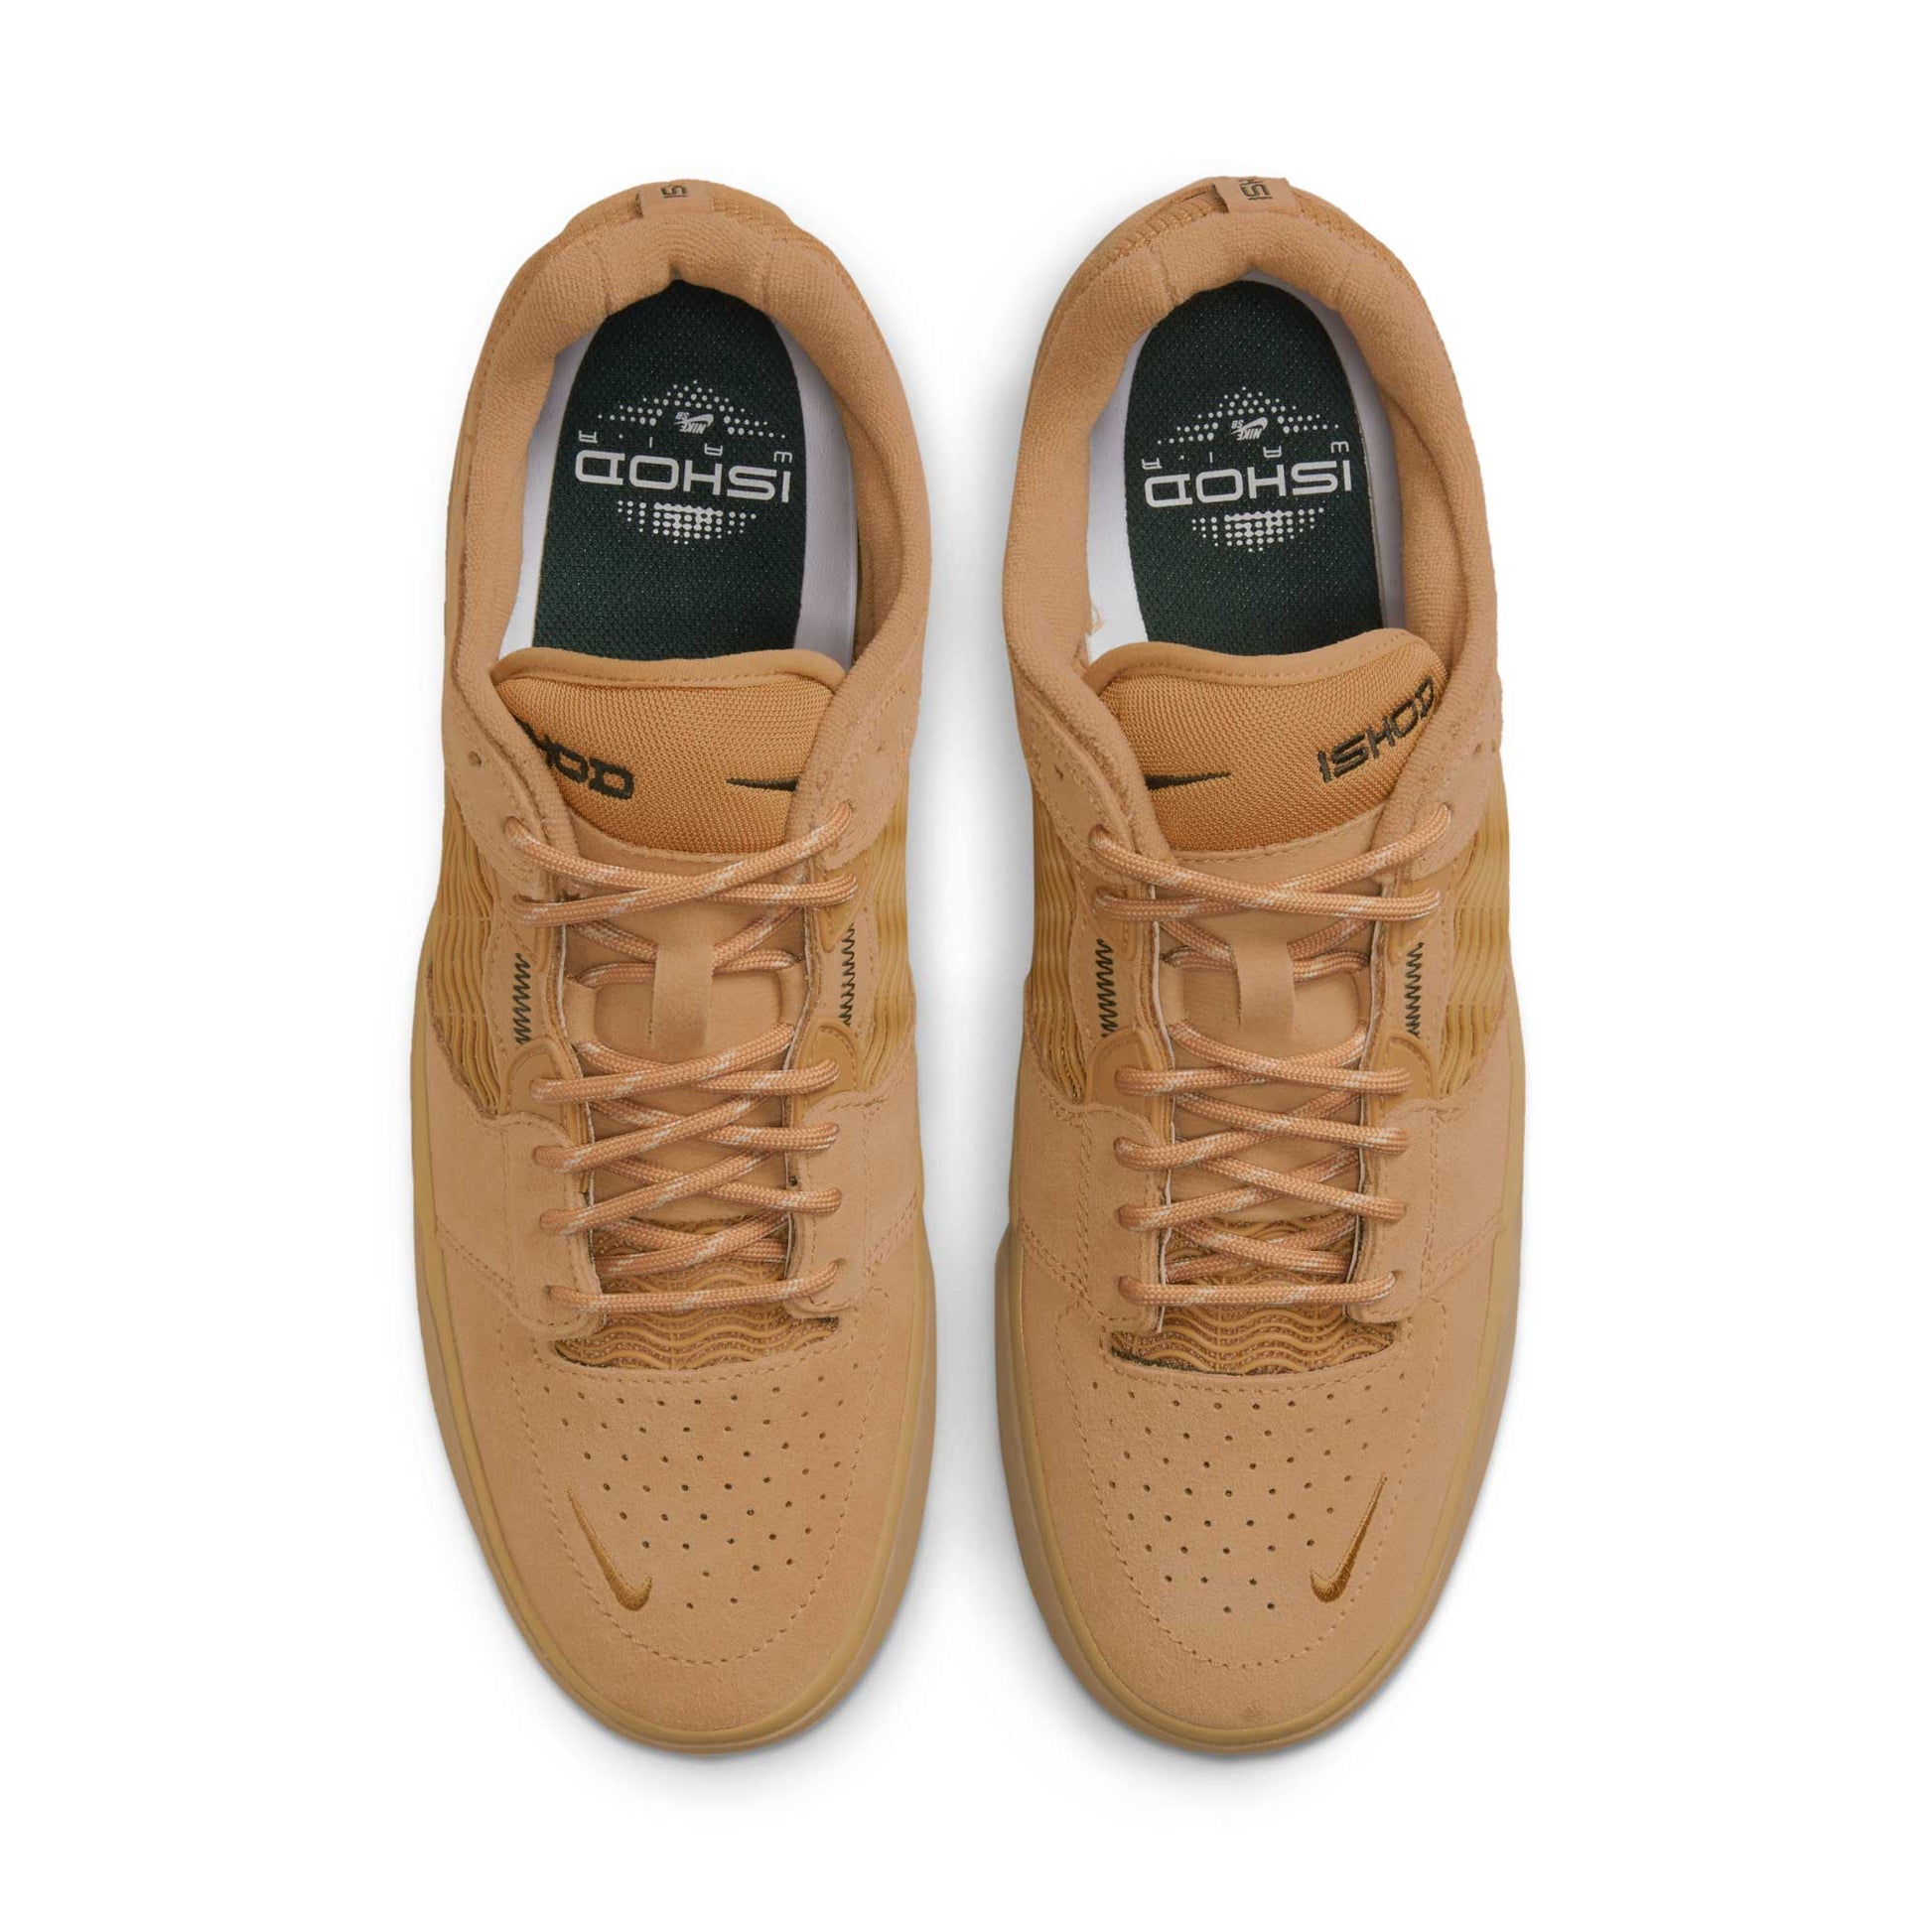 Nike SB Ishod Wair, flax/wheat-flax-gum light brown - Tiki Room Skateboards - 4